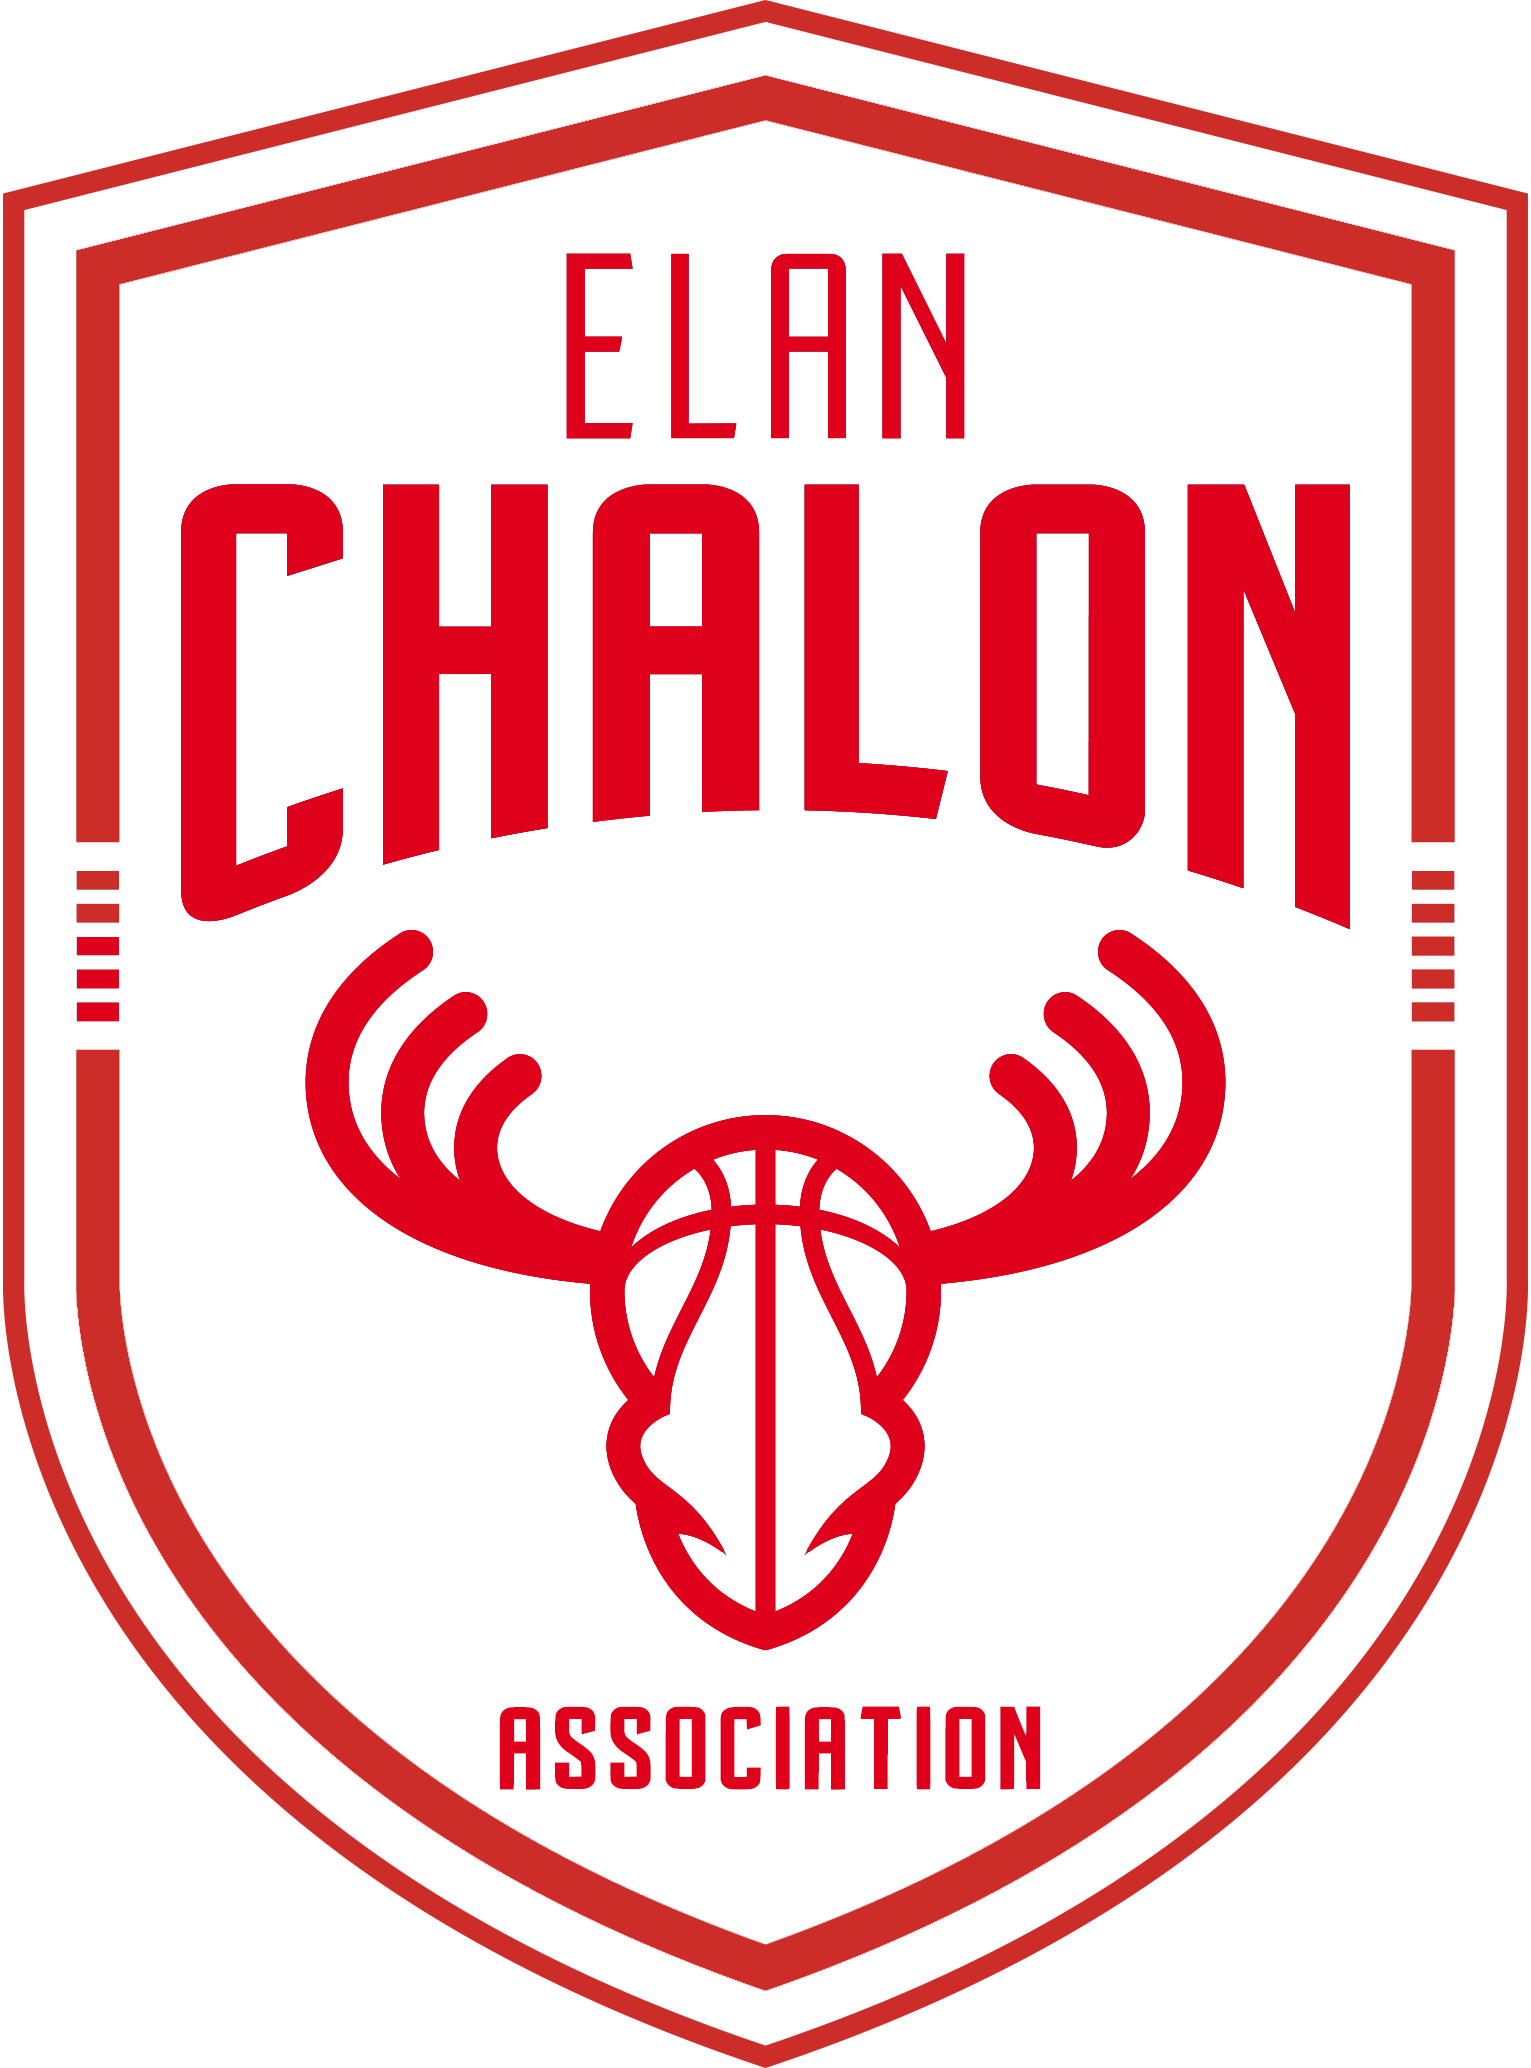 Elan Chalon Association